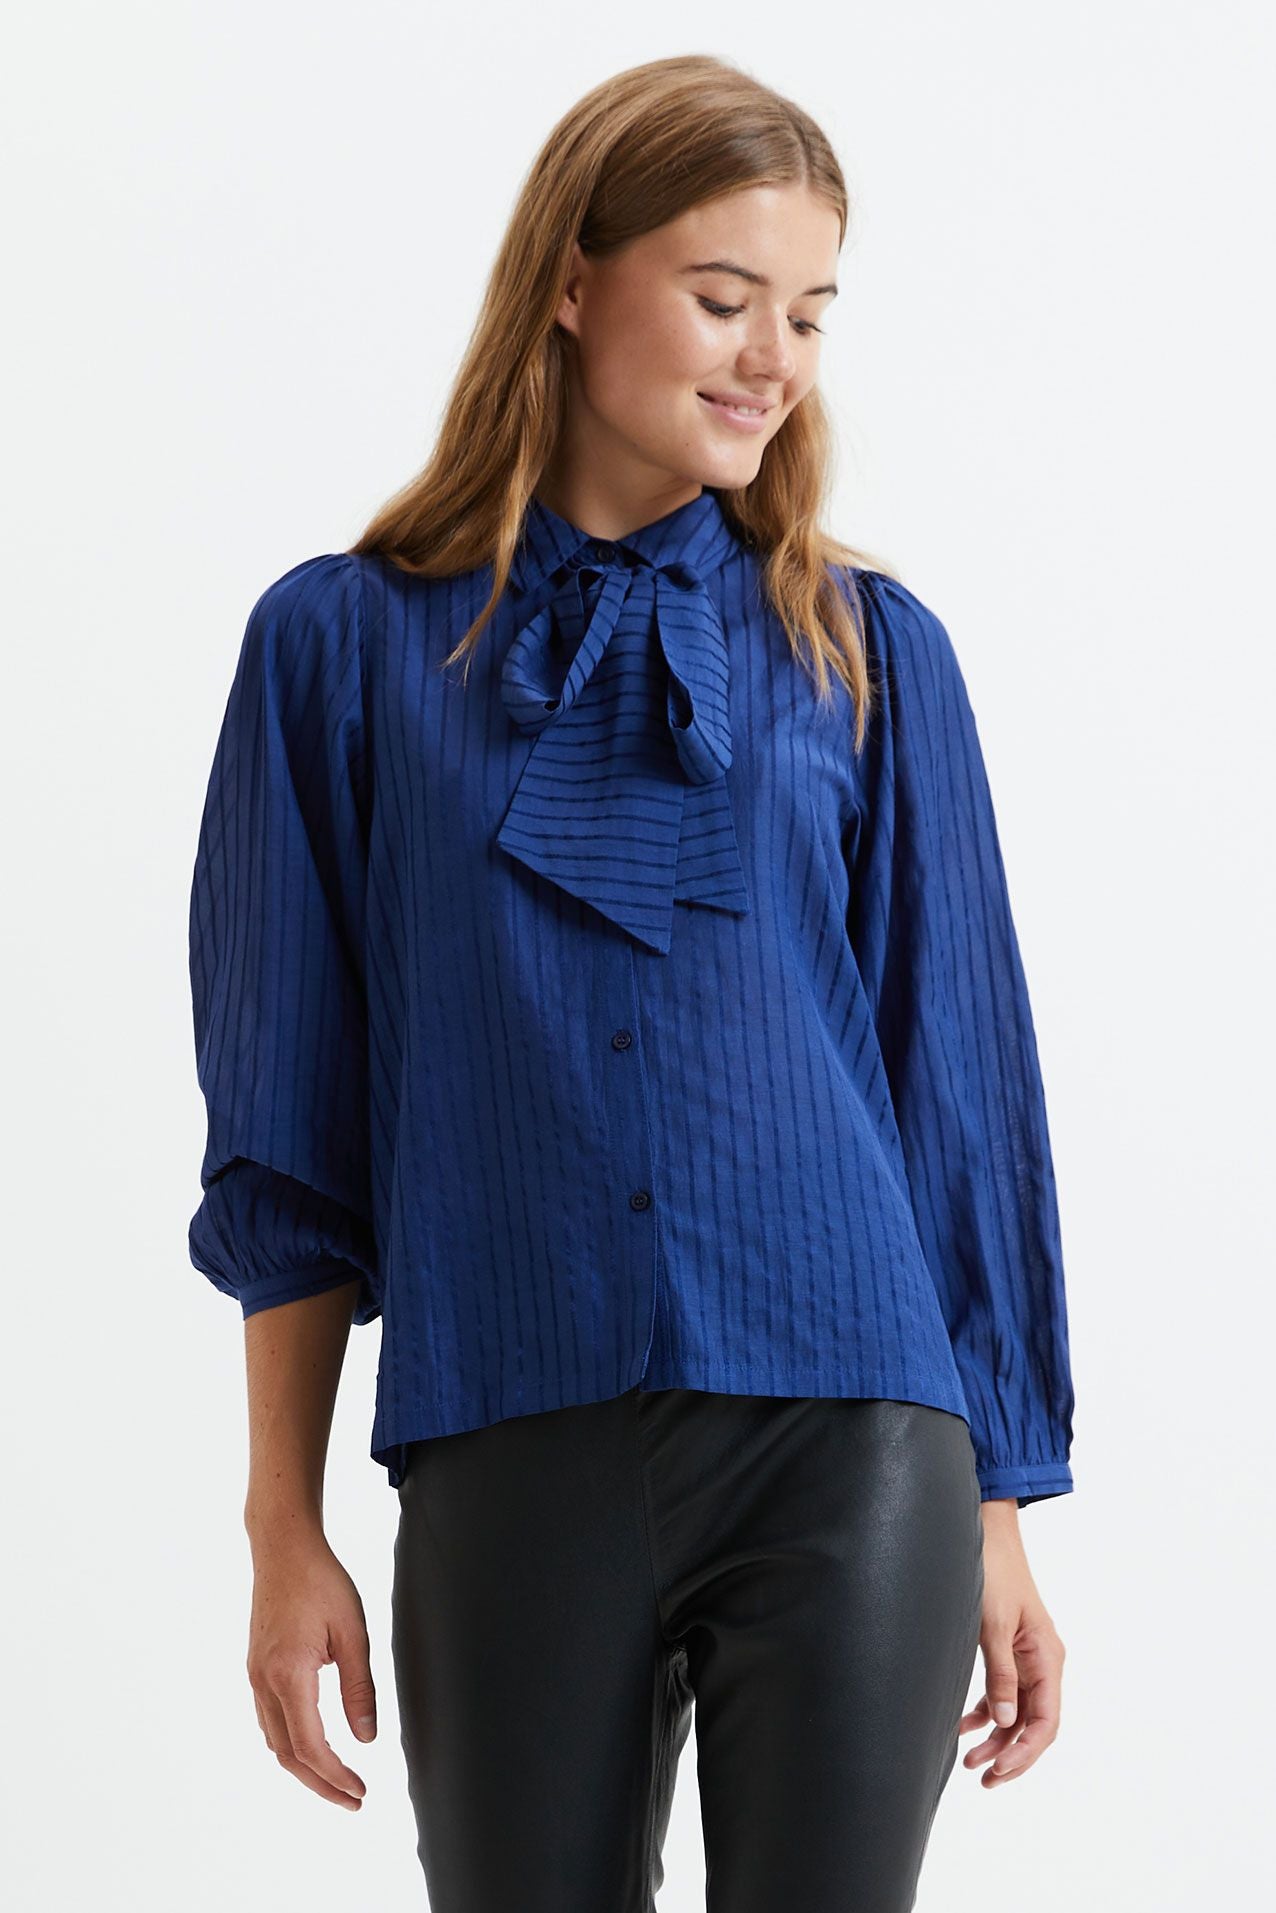 Lollys Laundry Ellie Shirt - Dark Blue Stripe